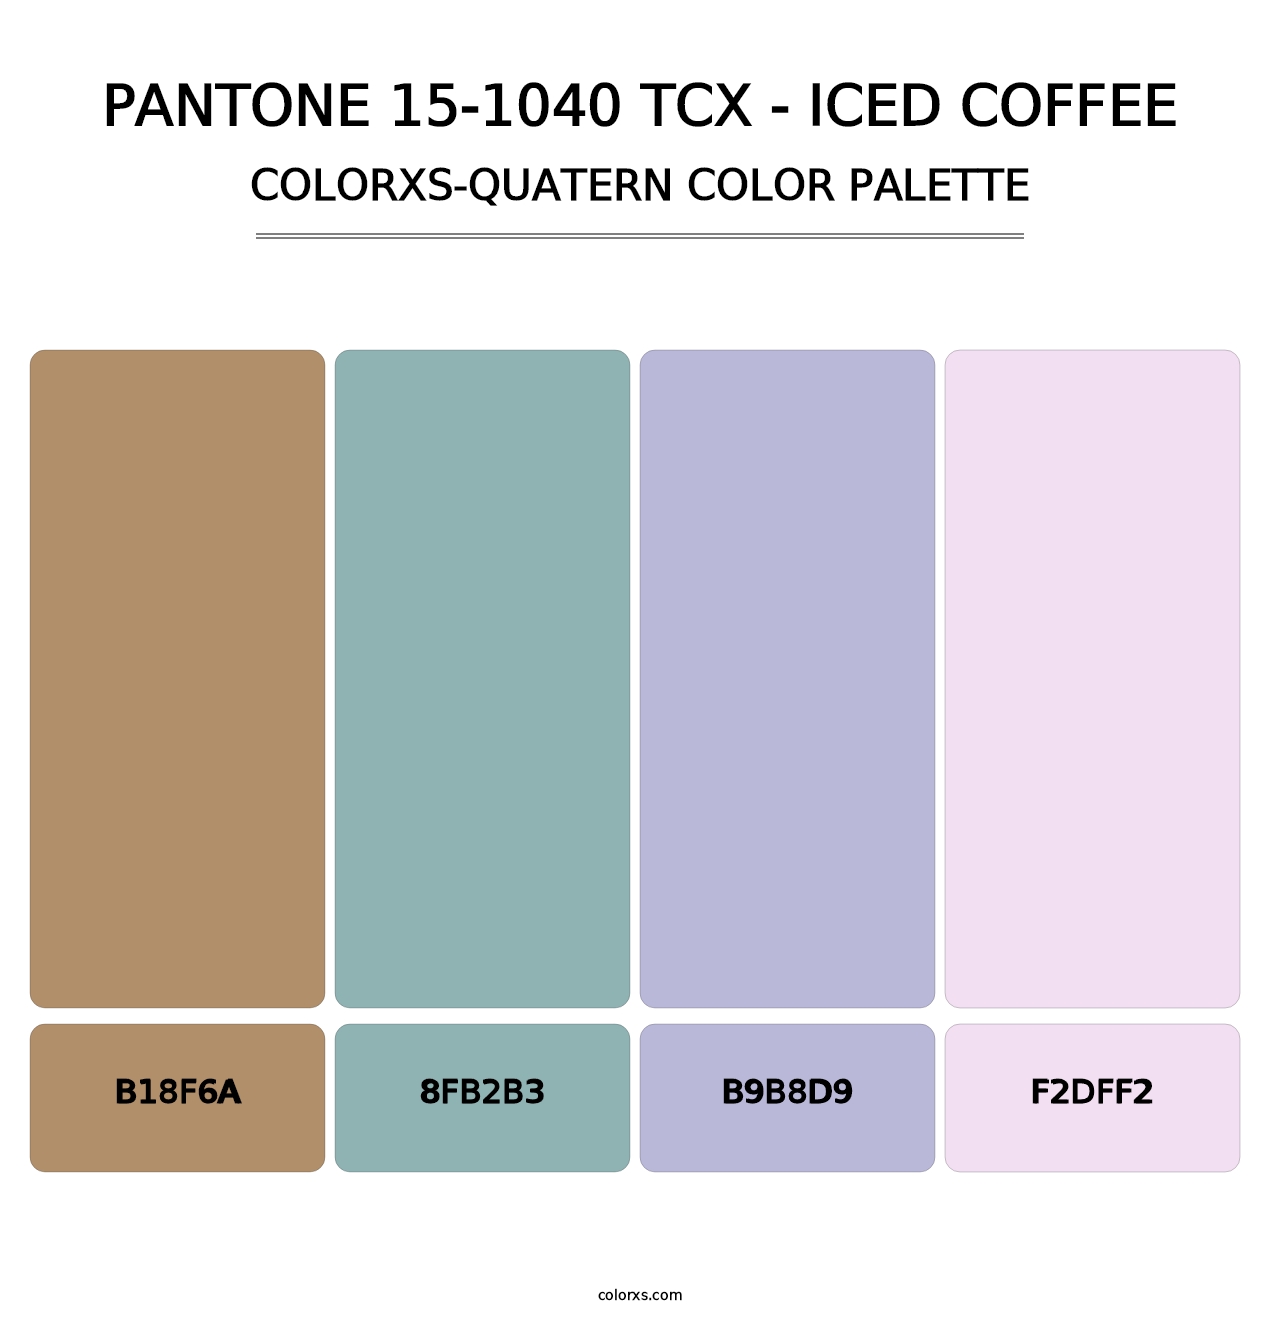 PANTONE 15-1040 TCX - Iced Coffee - Colorxs Quatern Palette